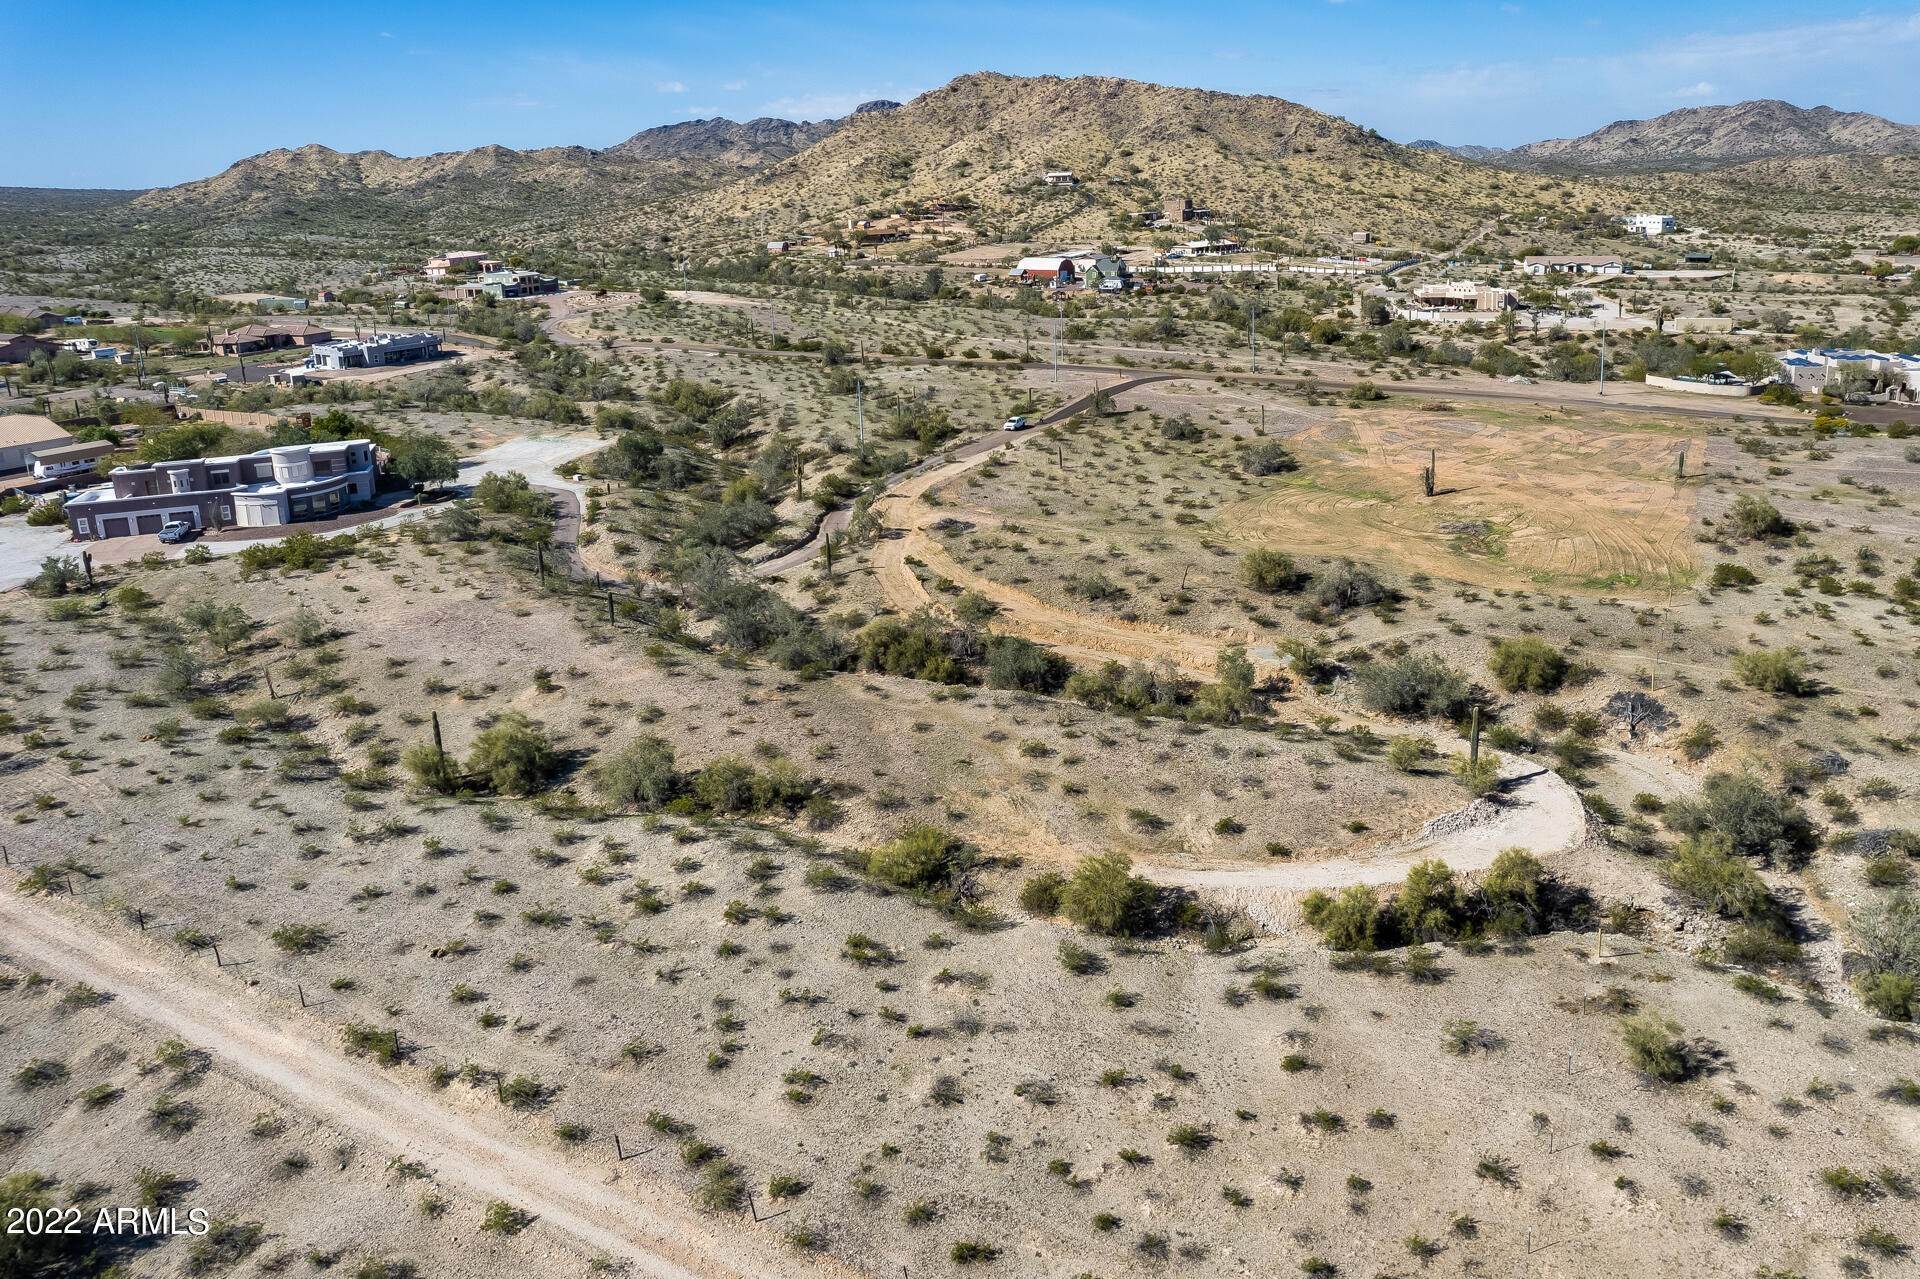 5. Land at Goodyear, AZ 85338